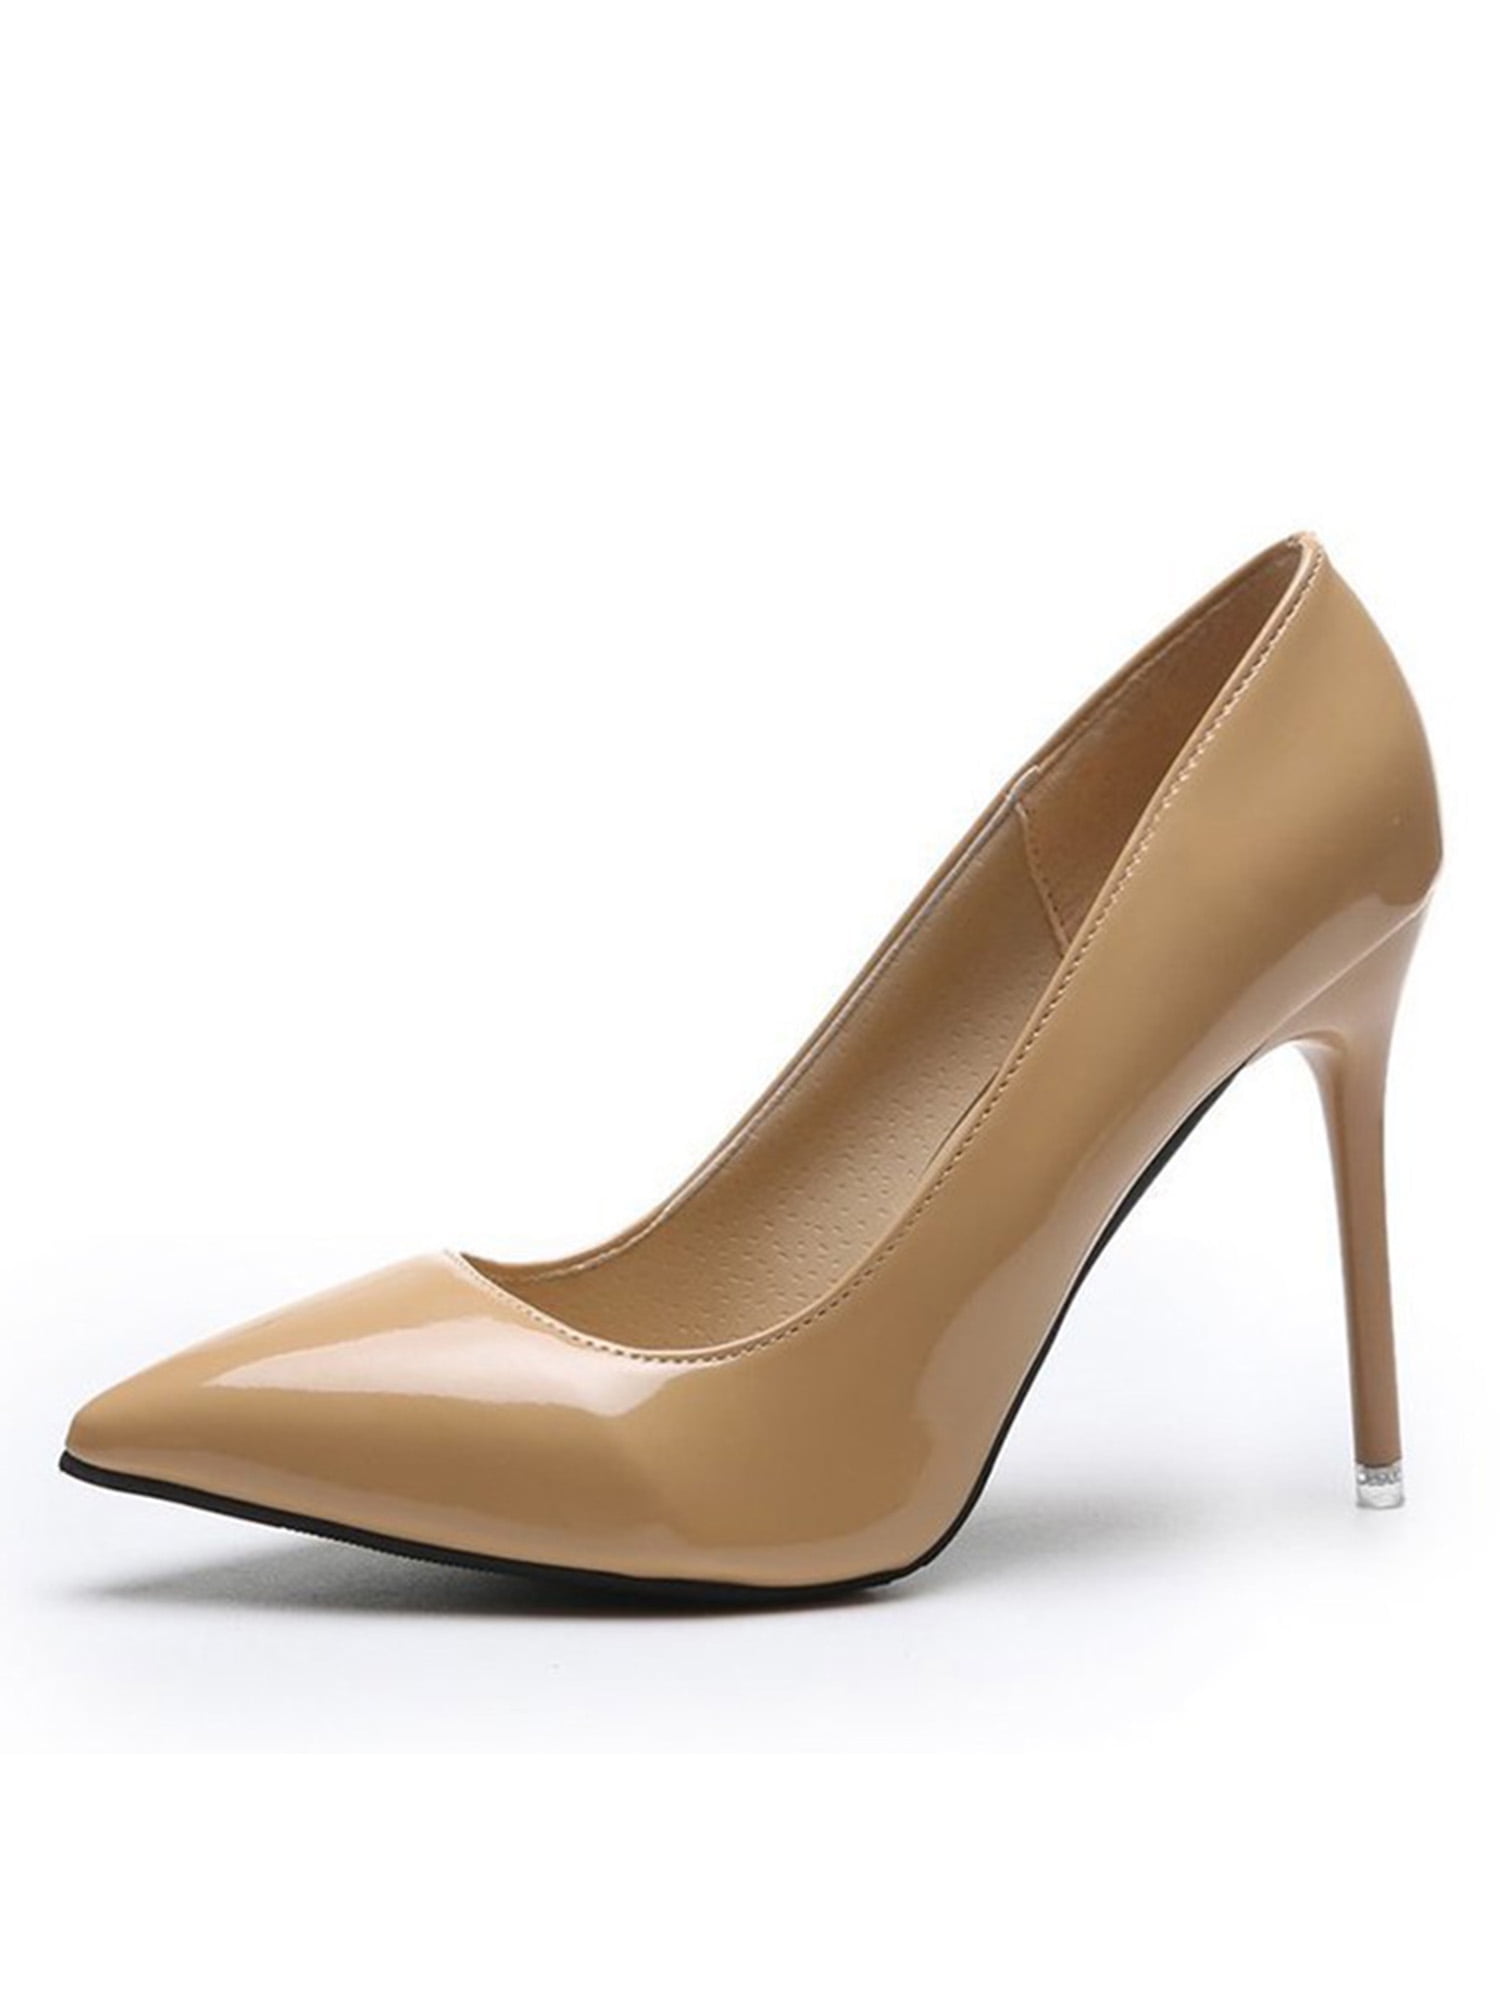 High Heels for Women Closed Toe Stillettos Heel Dress Shoes Apricot 5 ...